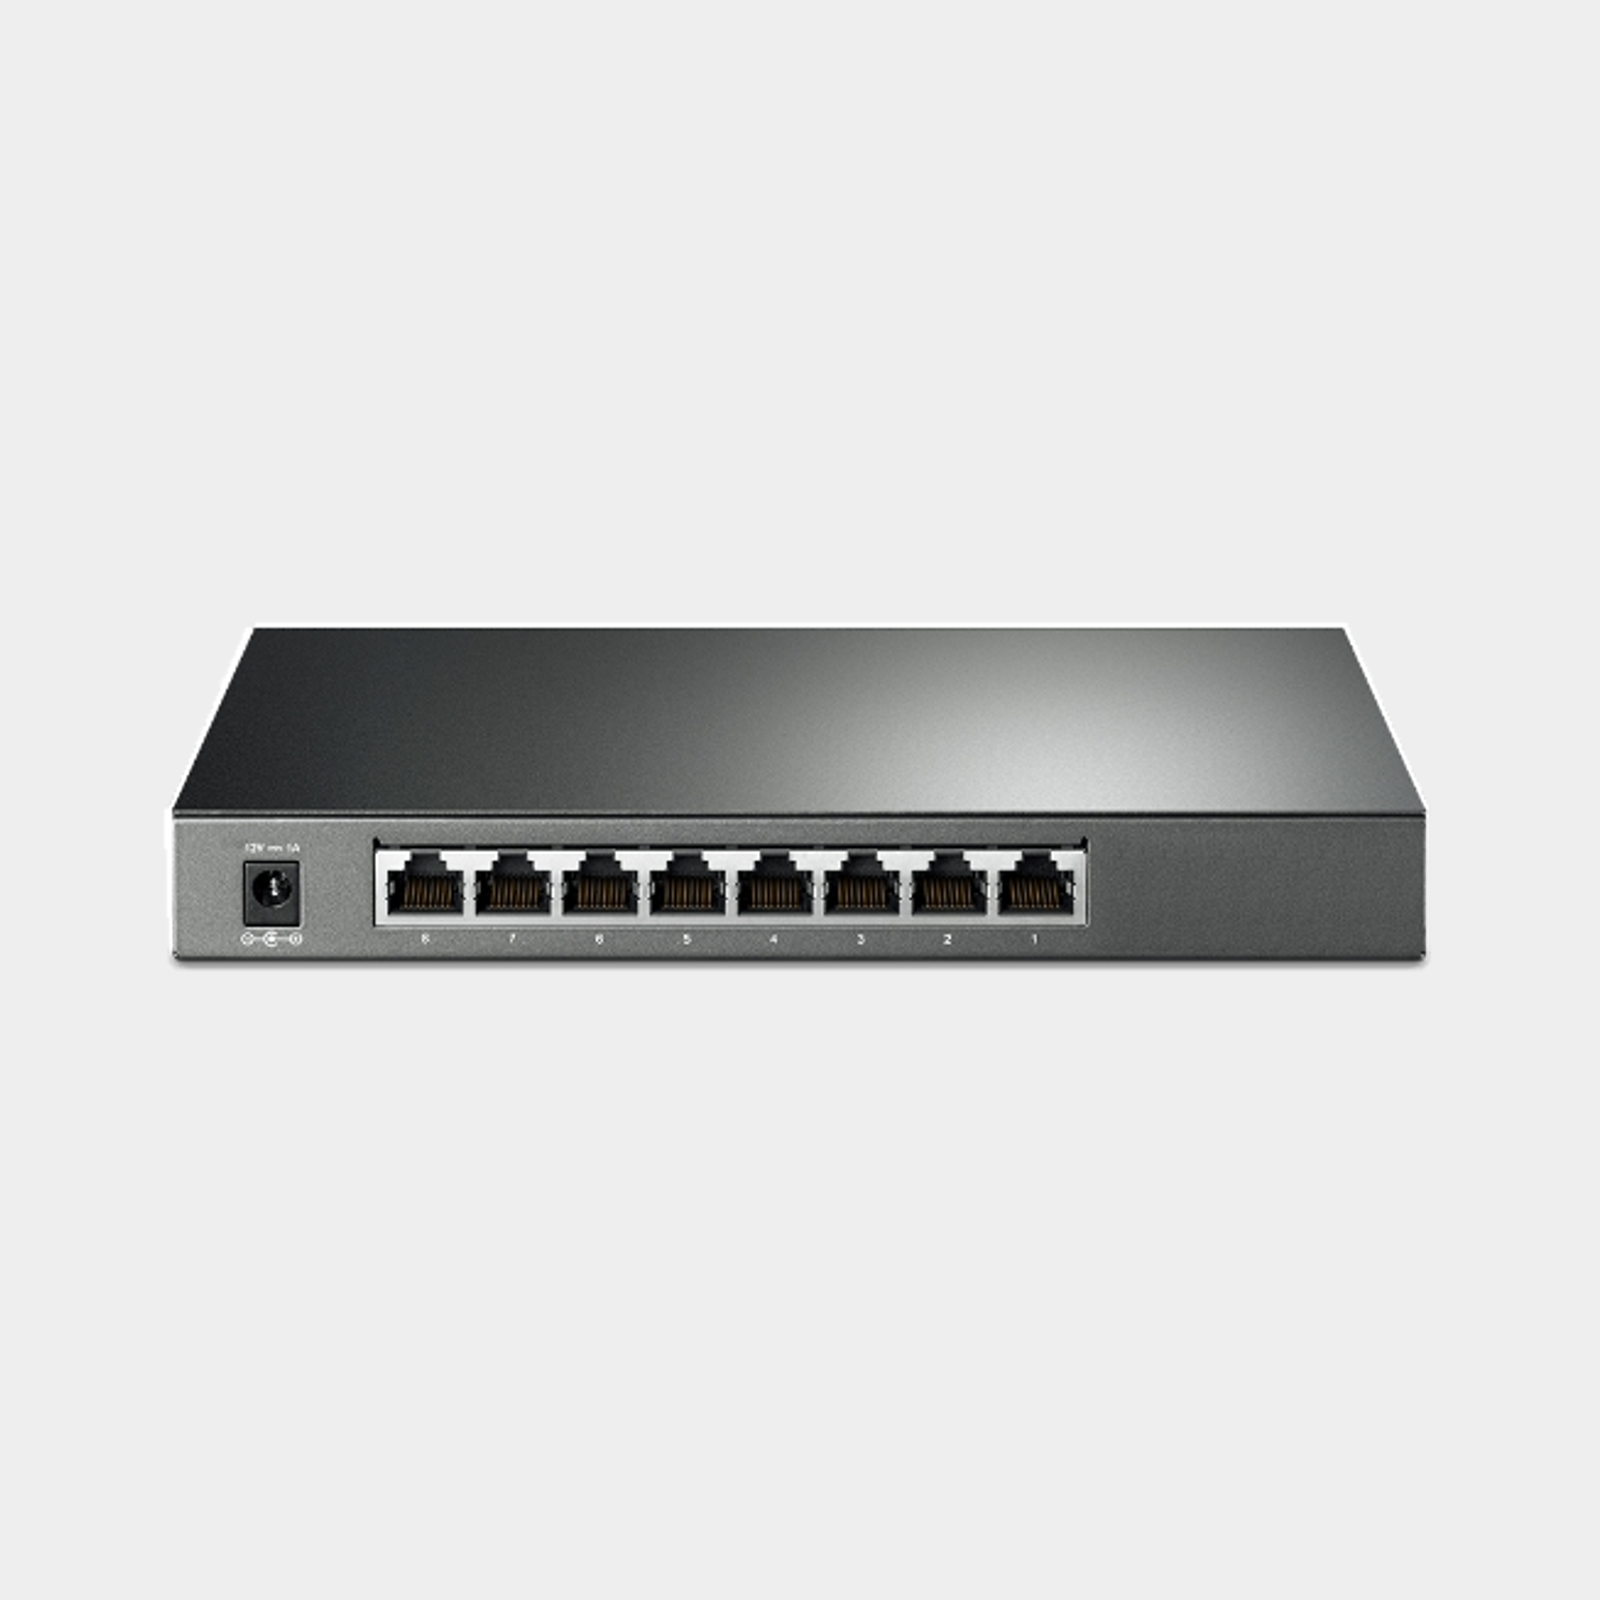 TP-Link JetStream 8-Port Gigabit Smart Switch (TL-SG2008) Network Switch Hub 8 Port Gigabit Switch [New Model No: (T1500G-8T)]